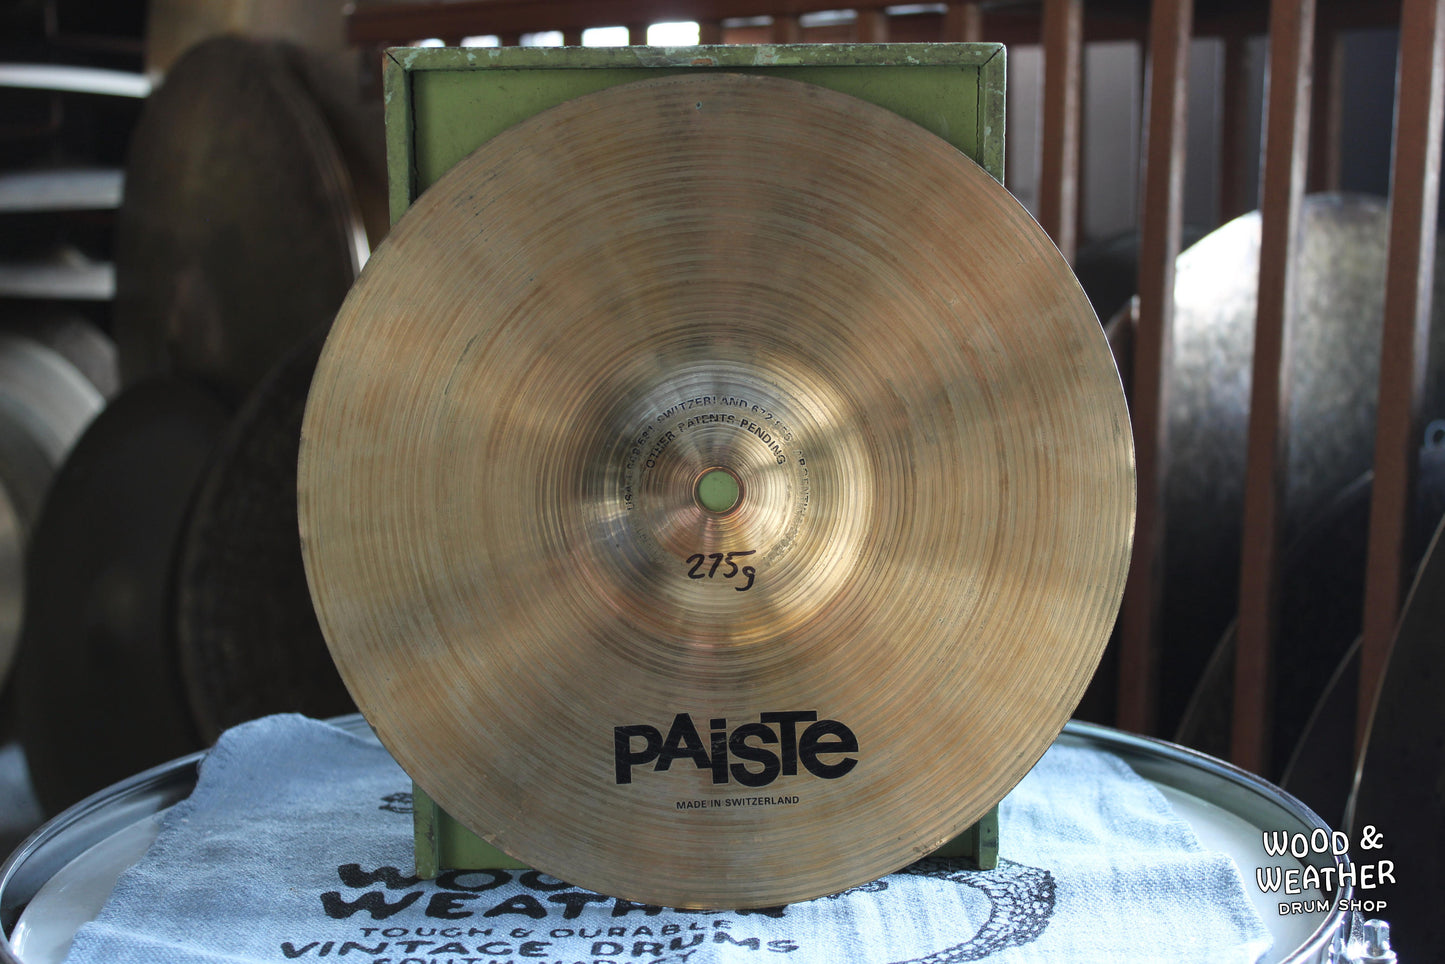 Used Paiste 10" Signature Splash Cymbal 275g